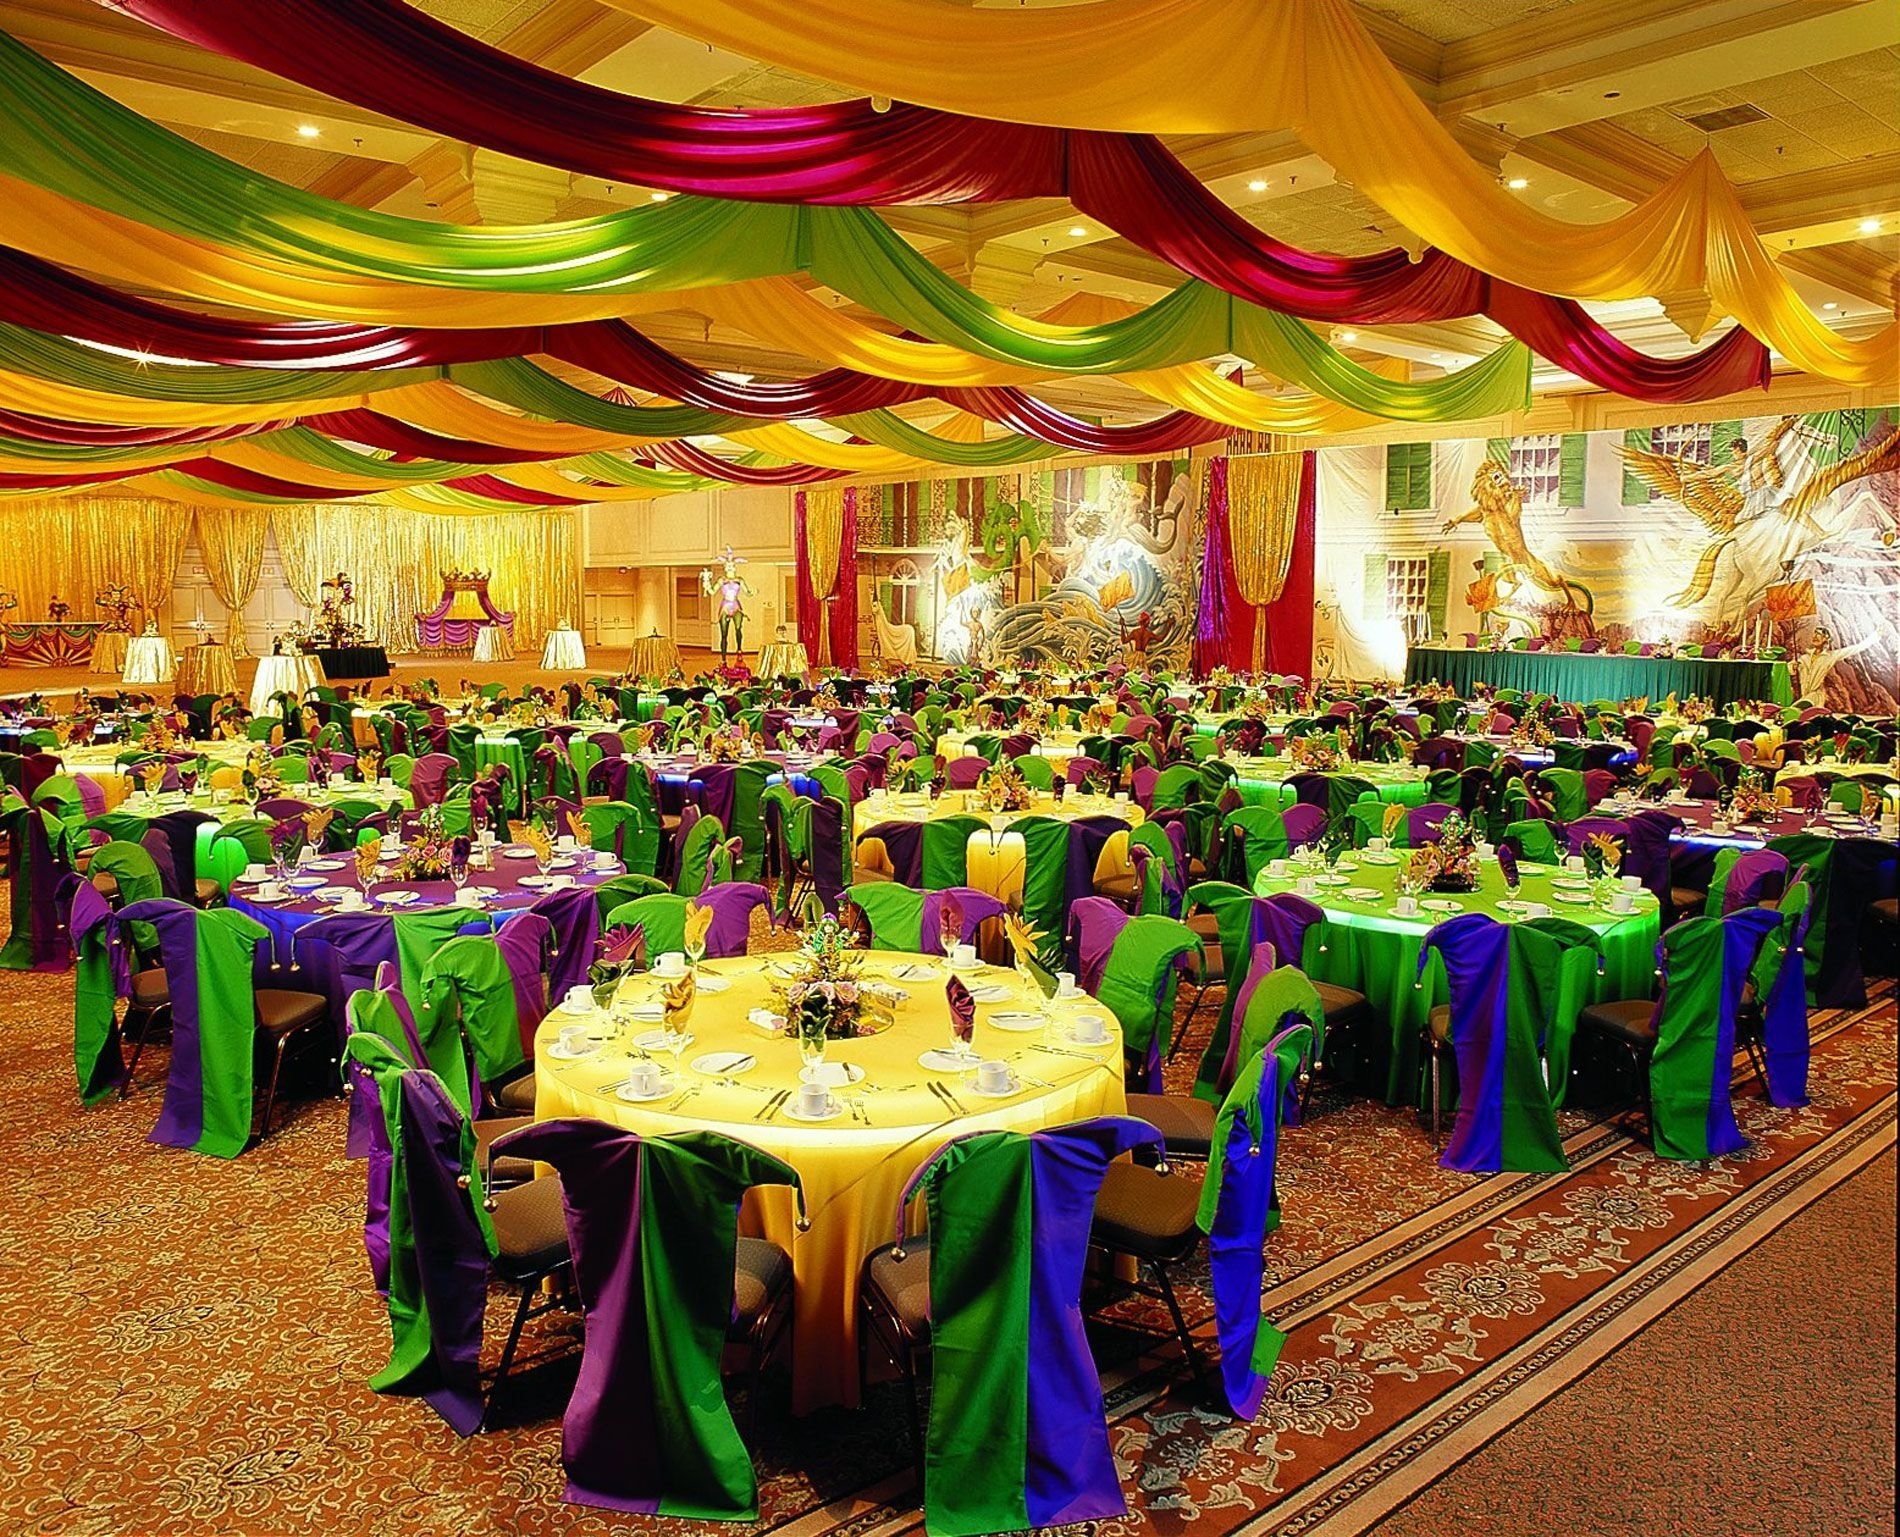 10 Pretty Mardi Gras Theme Party Ideas mardi gras wedding table decorations mardi gras producitons 3 2022